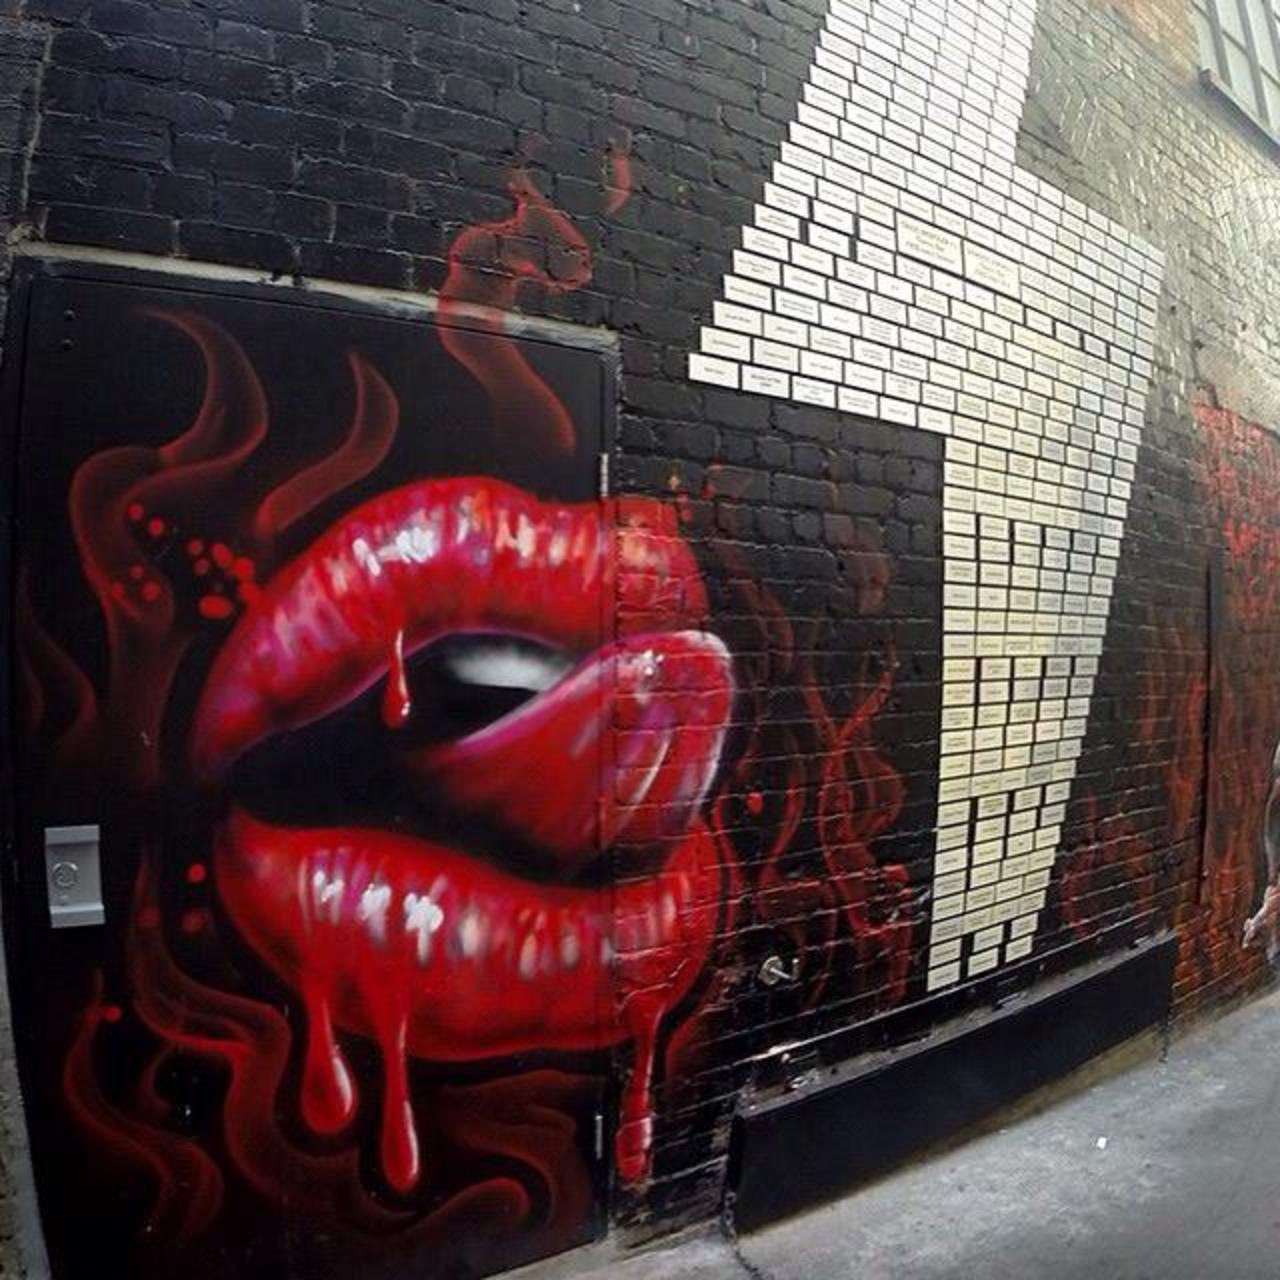 Latest Street Art by MikeMaka 

#art #arte #graffiti #streetart http://t.co/itZb1eLU6p